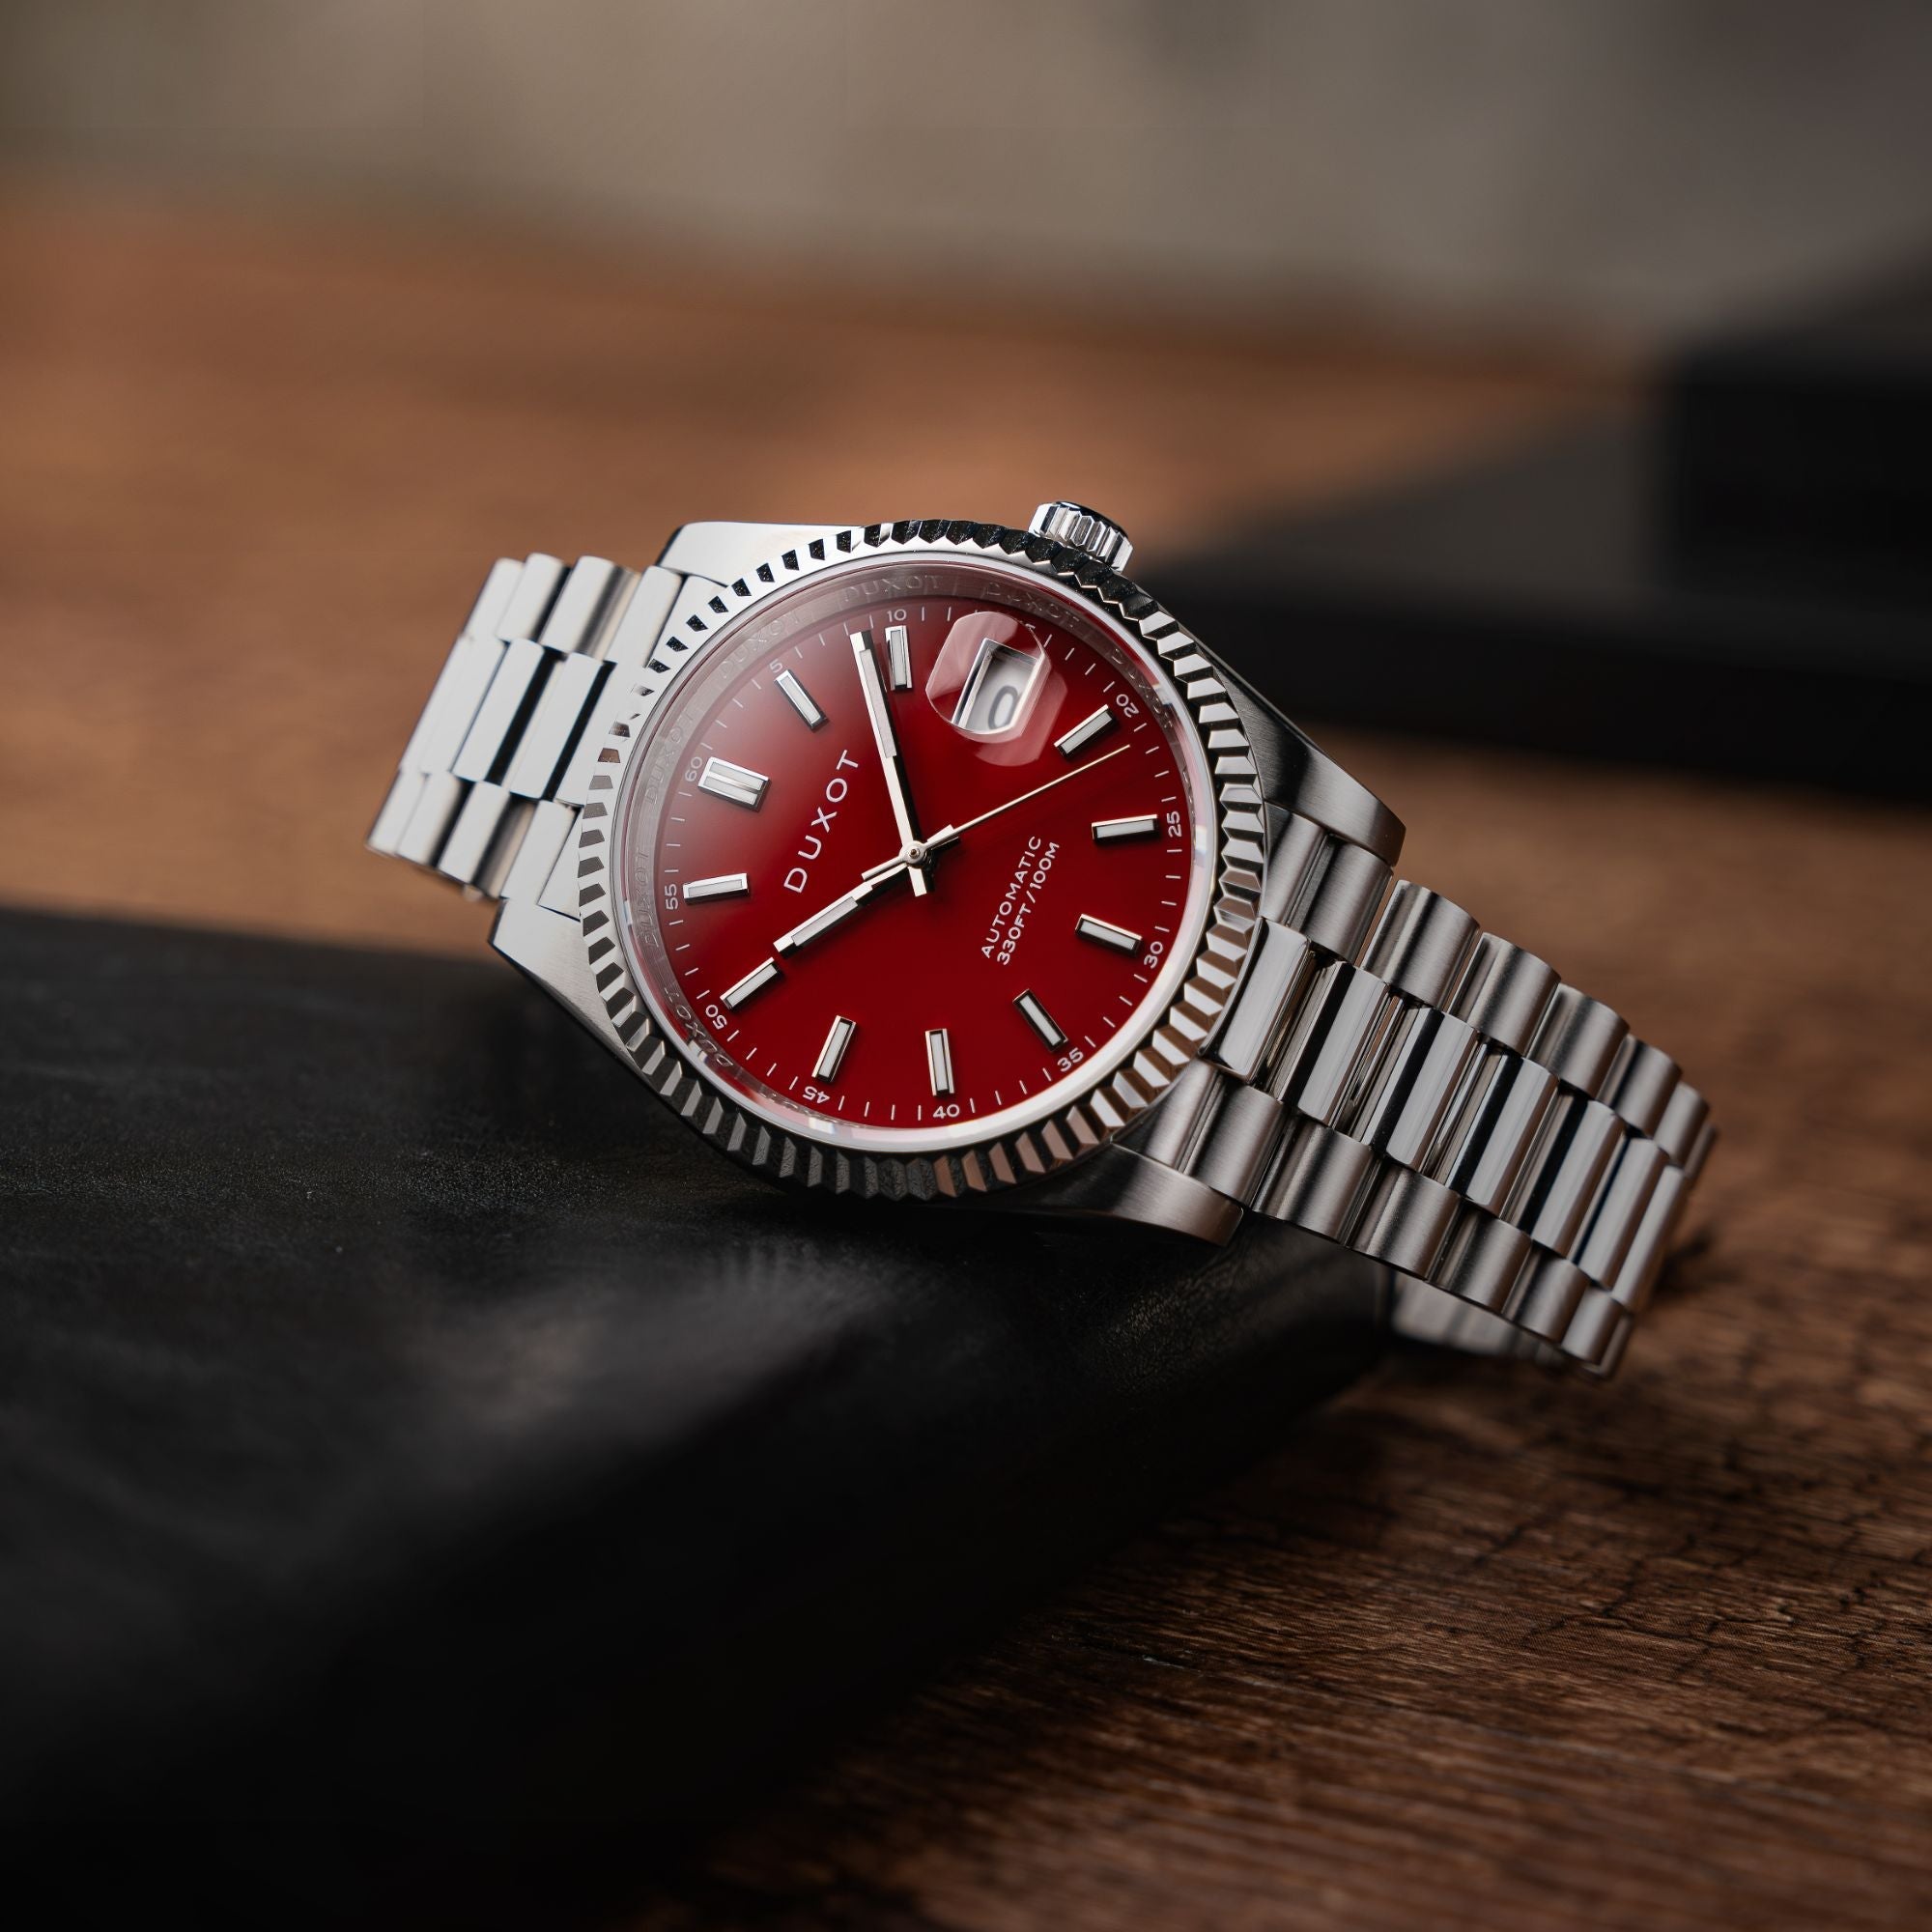 Duxot Marcel Automatic Firebrick Red Men's Watch DX-2059-44